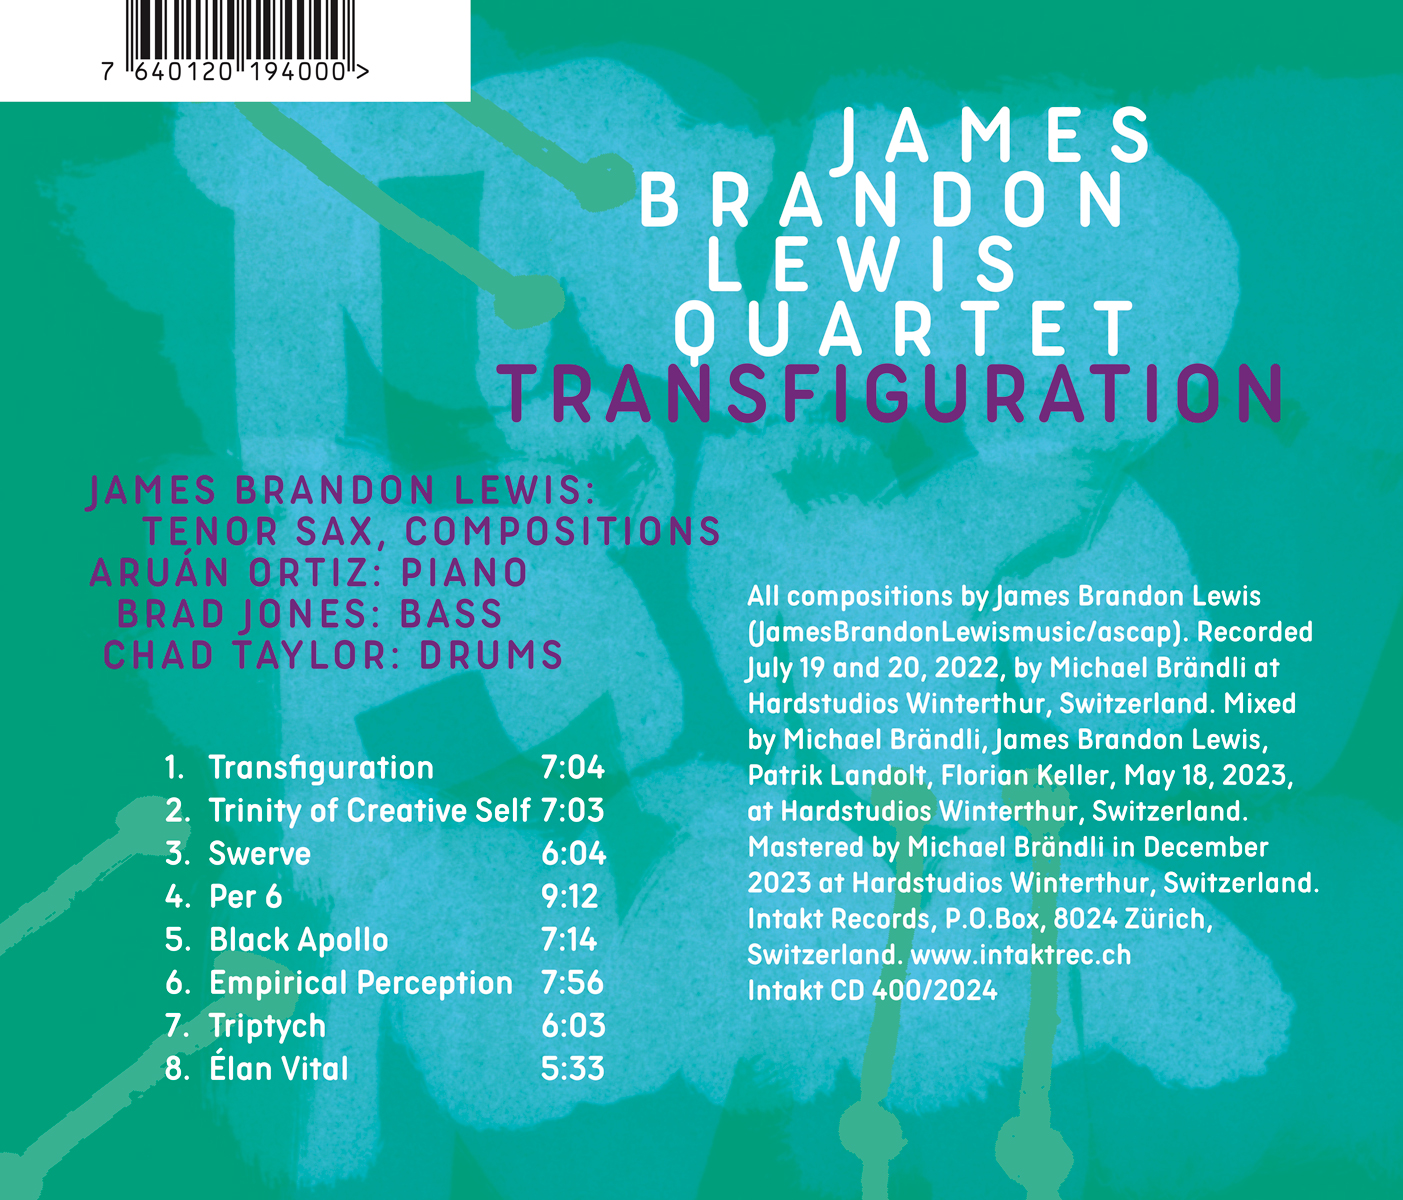 JAMES BRANDON LEWIS QUARTET
TRANSFIGURATION cover back intakt records